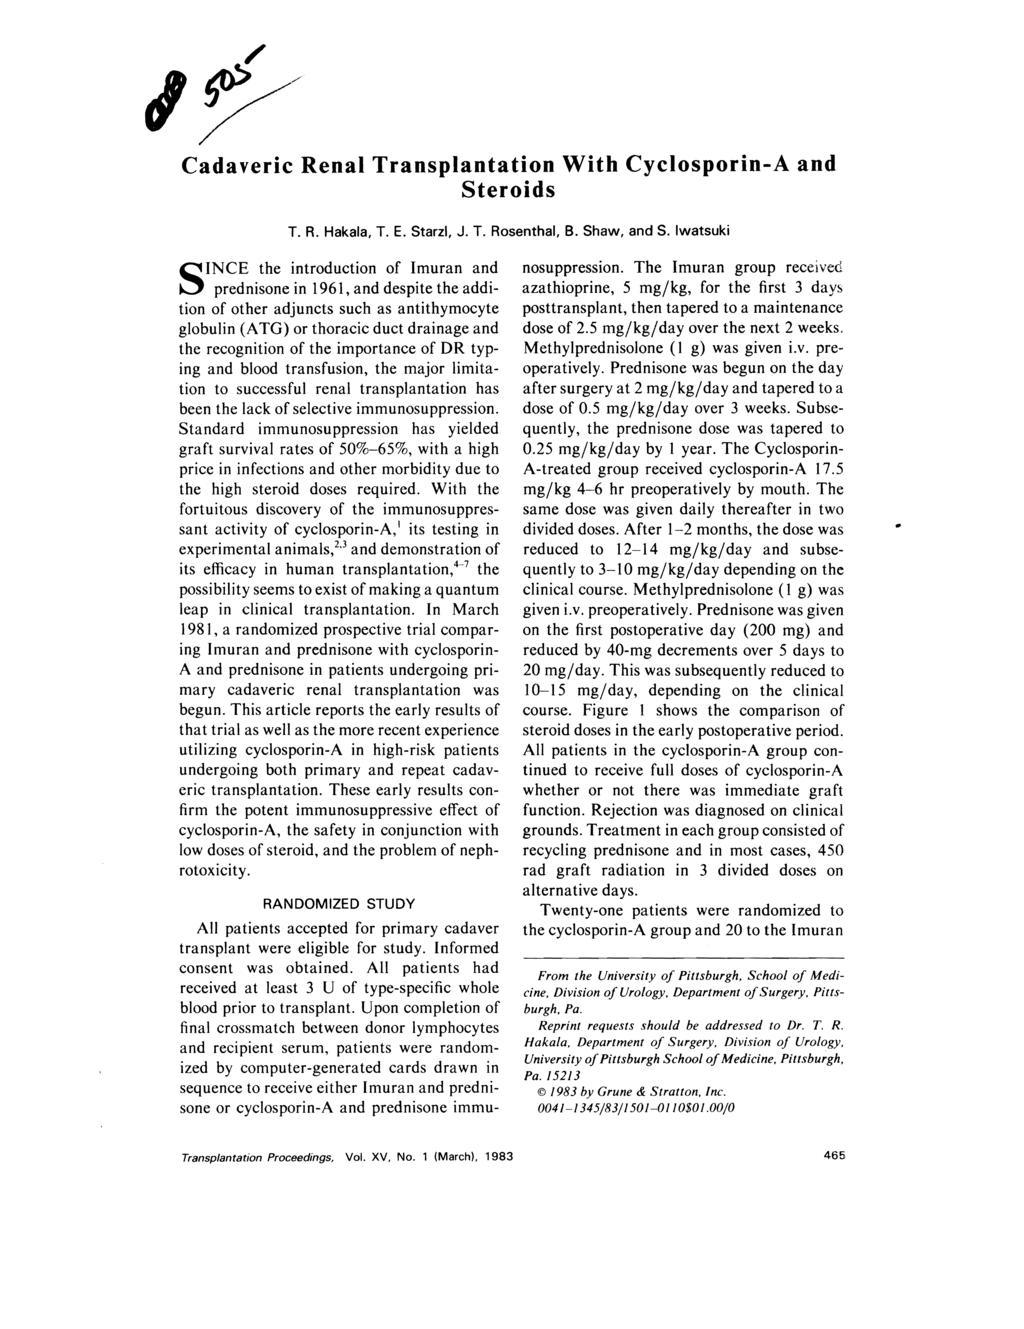 Cadaveric Renal Transplantation With Cyclosporin-A and Steroids T. R. Hakala, T. E. Starzl, J. T. Rosenthal, B. Shaw, and S.